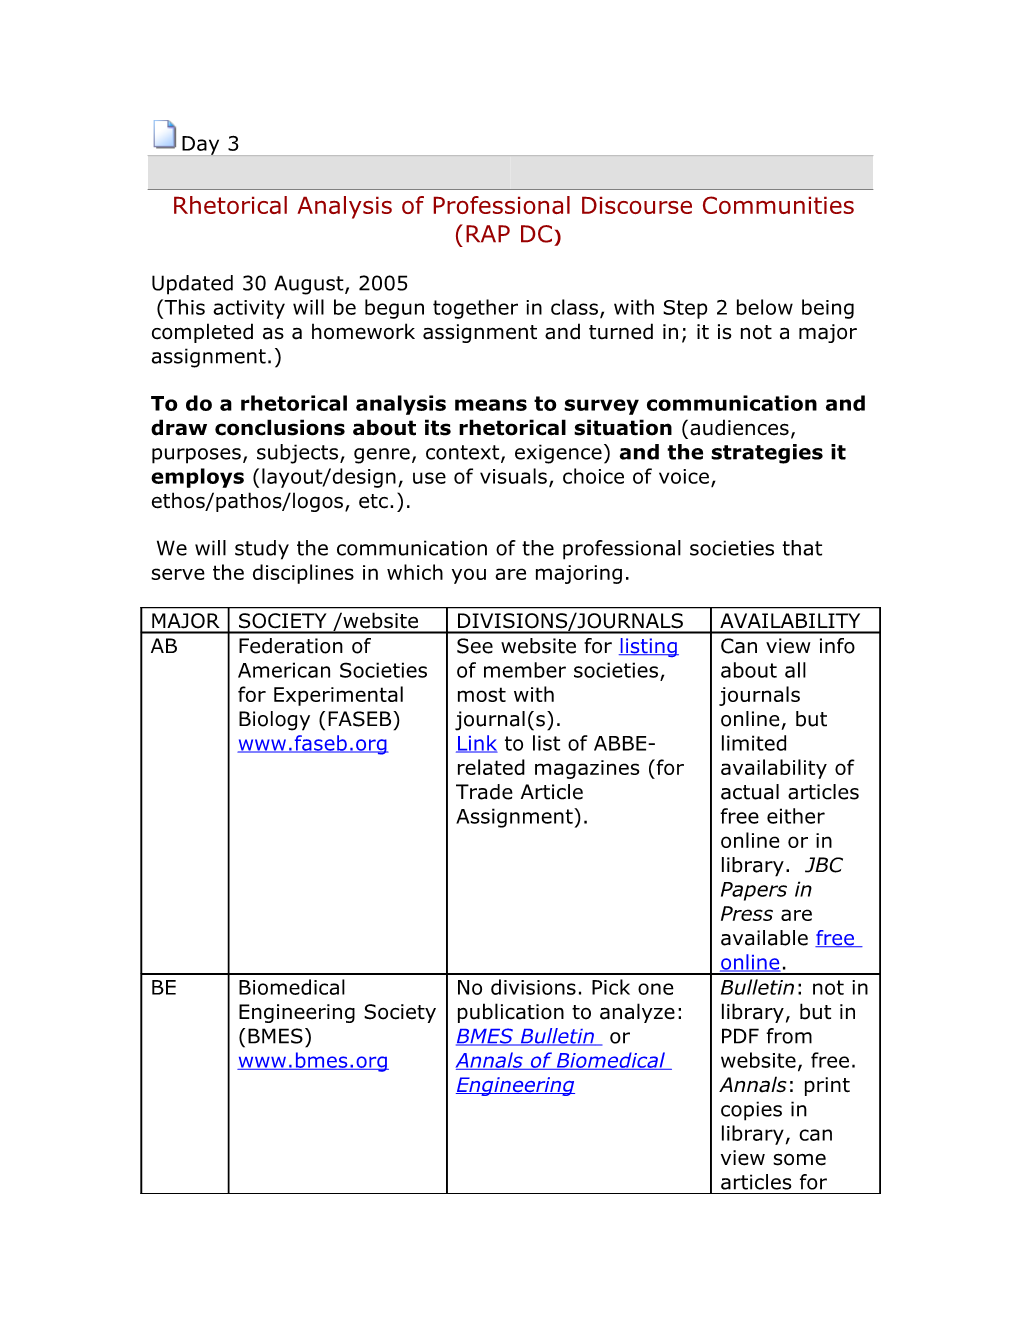 Rhetorical Analysis of Professional Discourse Communities (RAP DC)